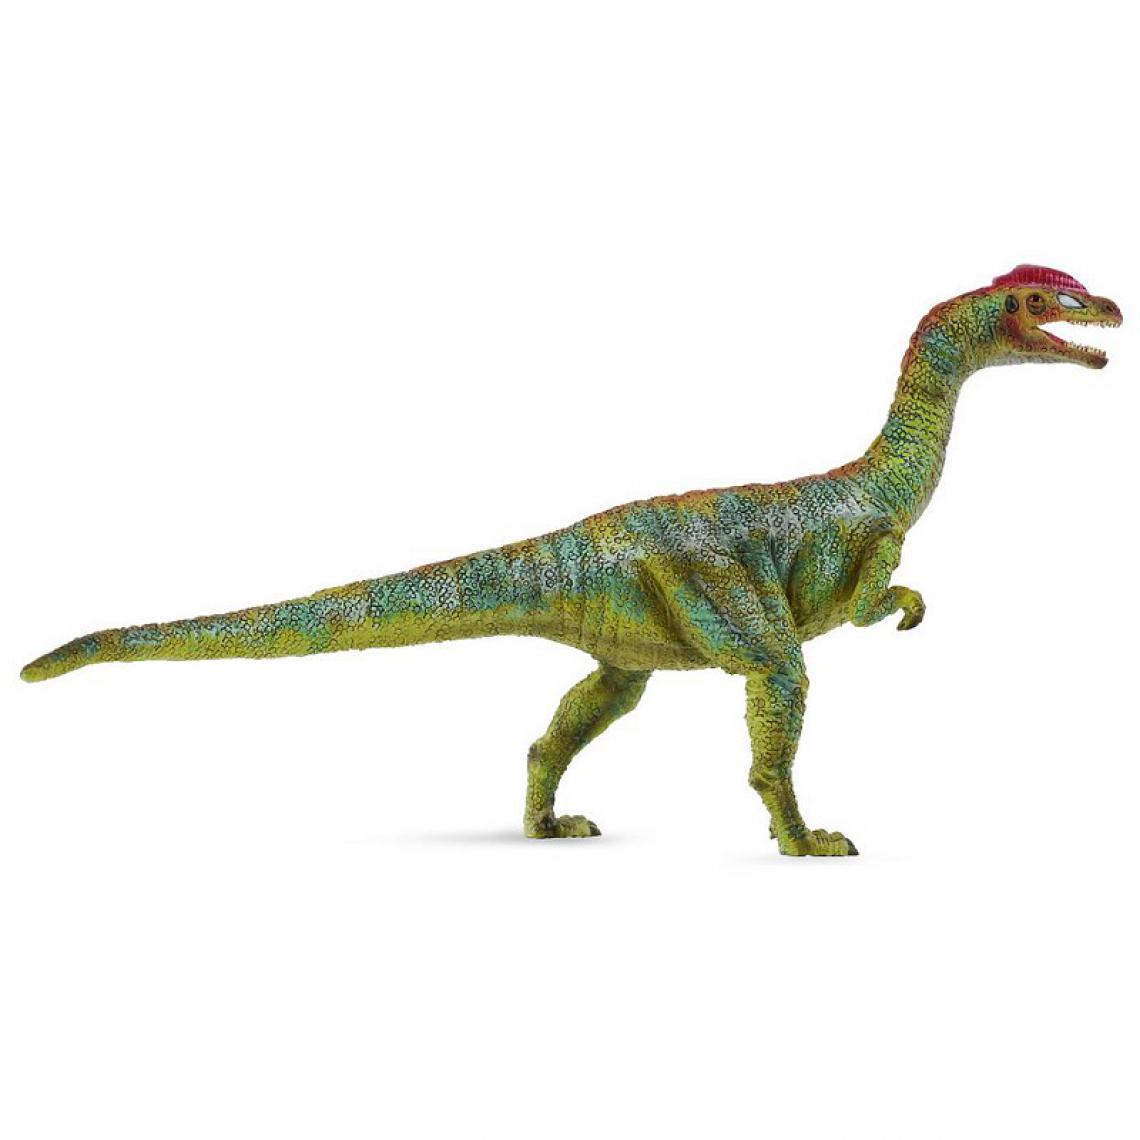 Figurines Collecta - Figurine Dinosaure : Lilienst - Dinosaures